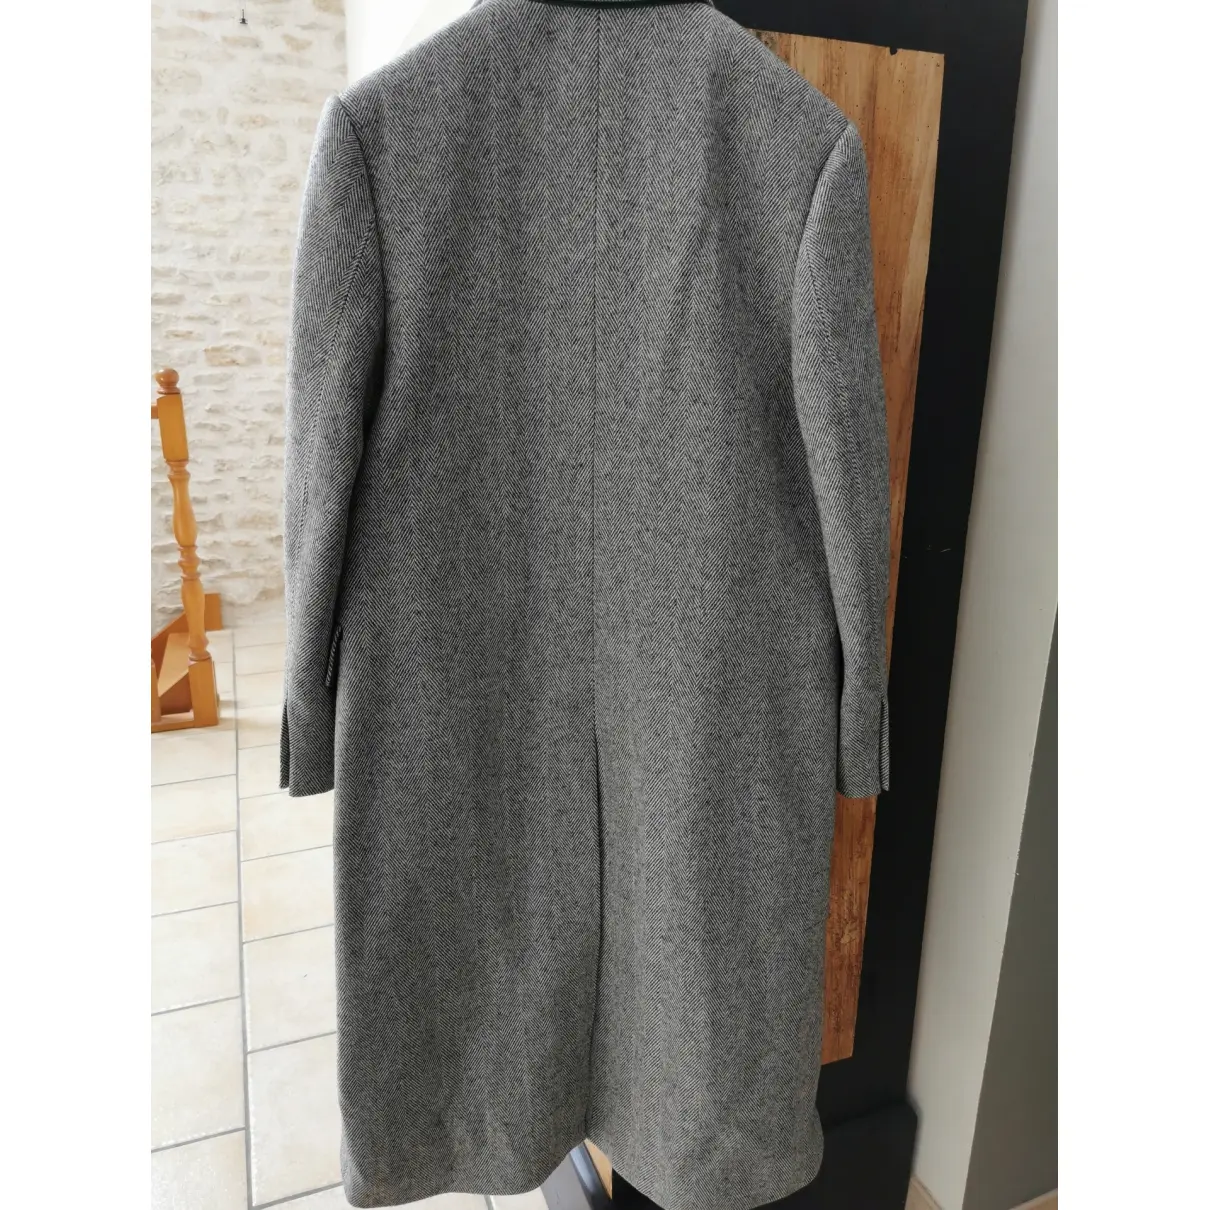 Buy Lacoste Wool coat online